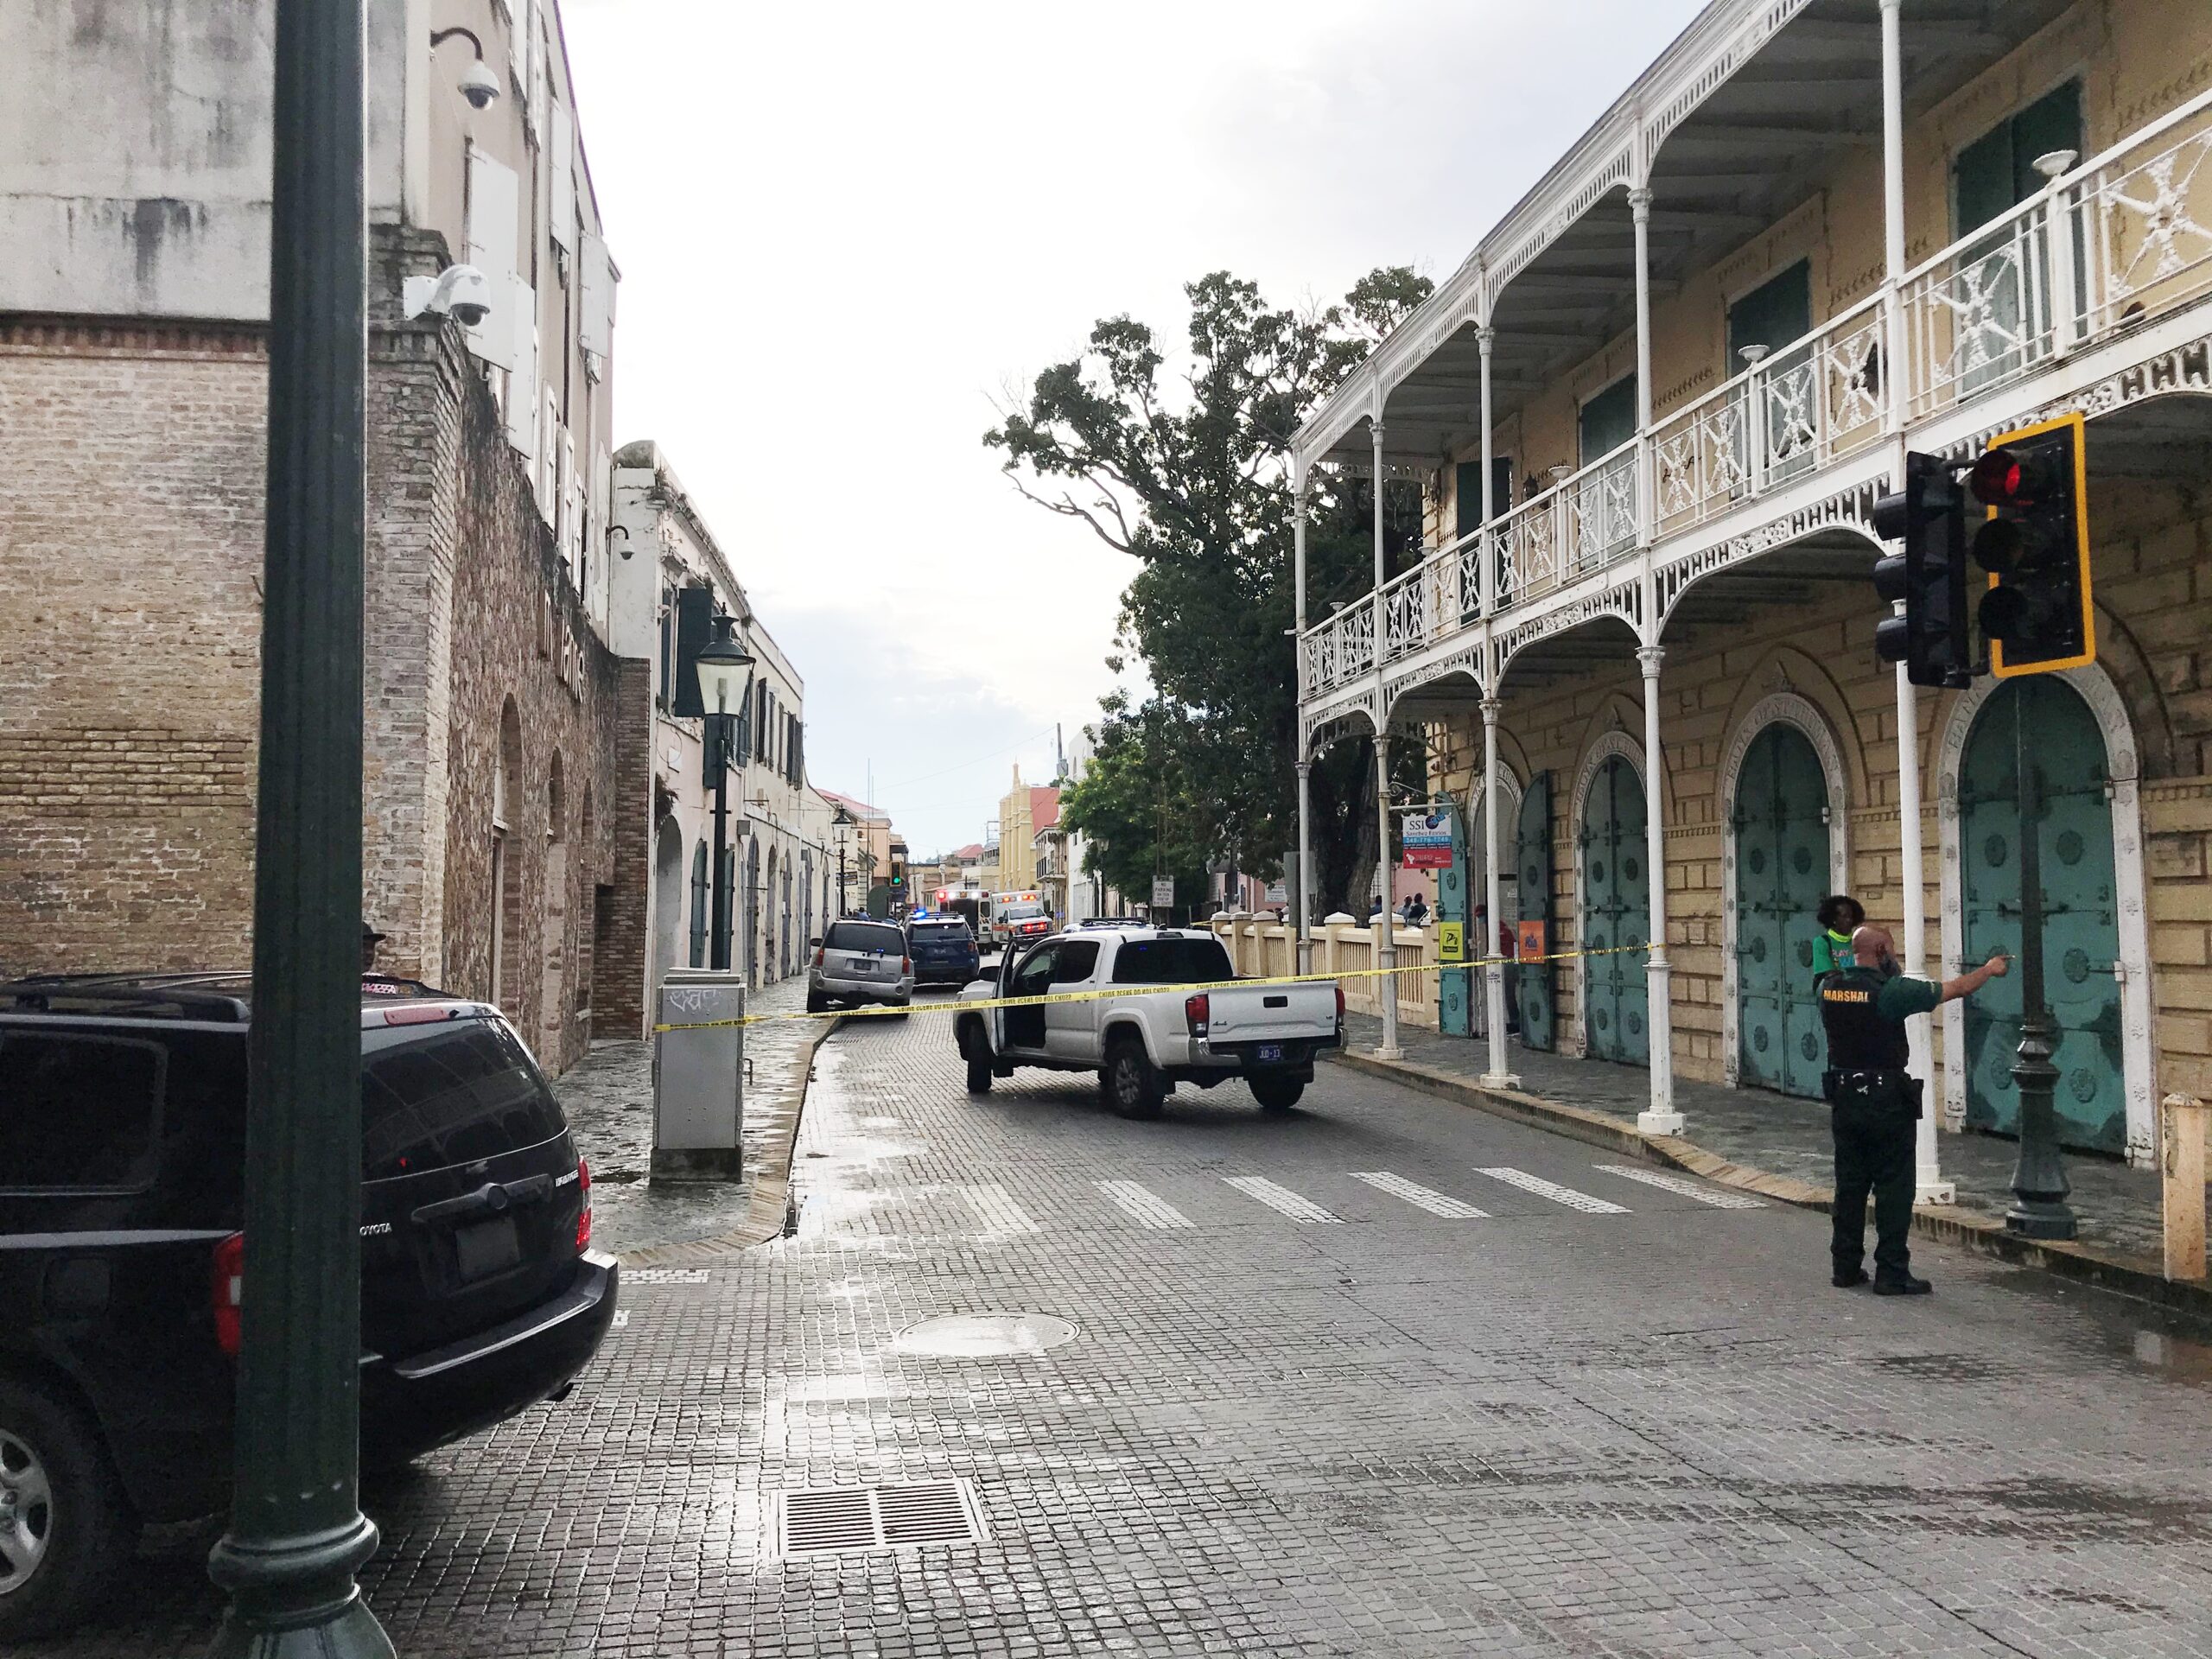 St. Thomas Woman Shot On Kronprindsens Gade In Charlotte Amalie Today